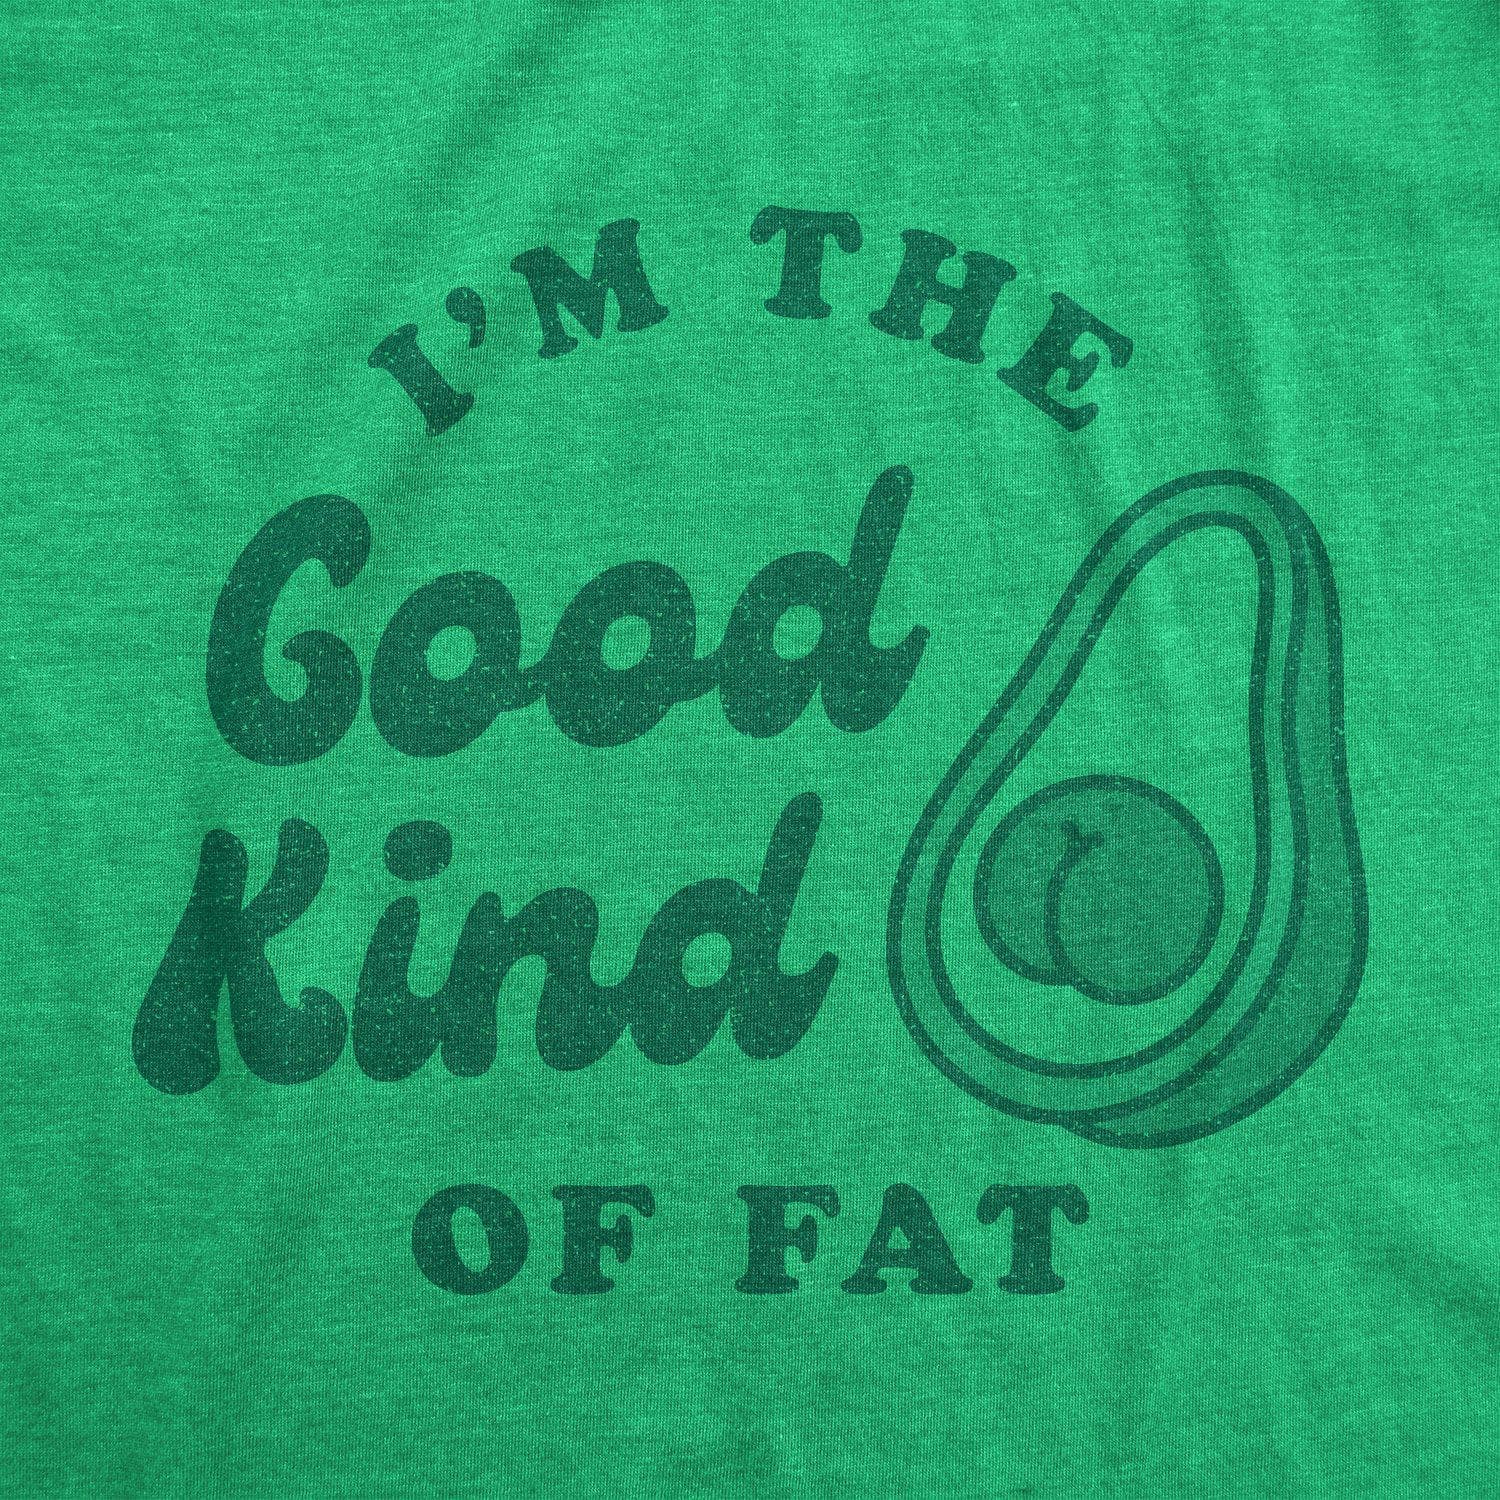 I'm The Good Kind Of Fat Women's Tshirt - Crazy Dog T-Shirts